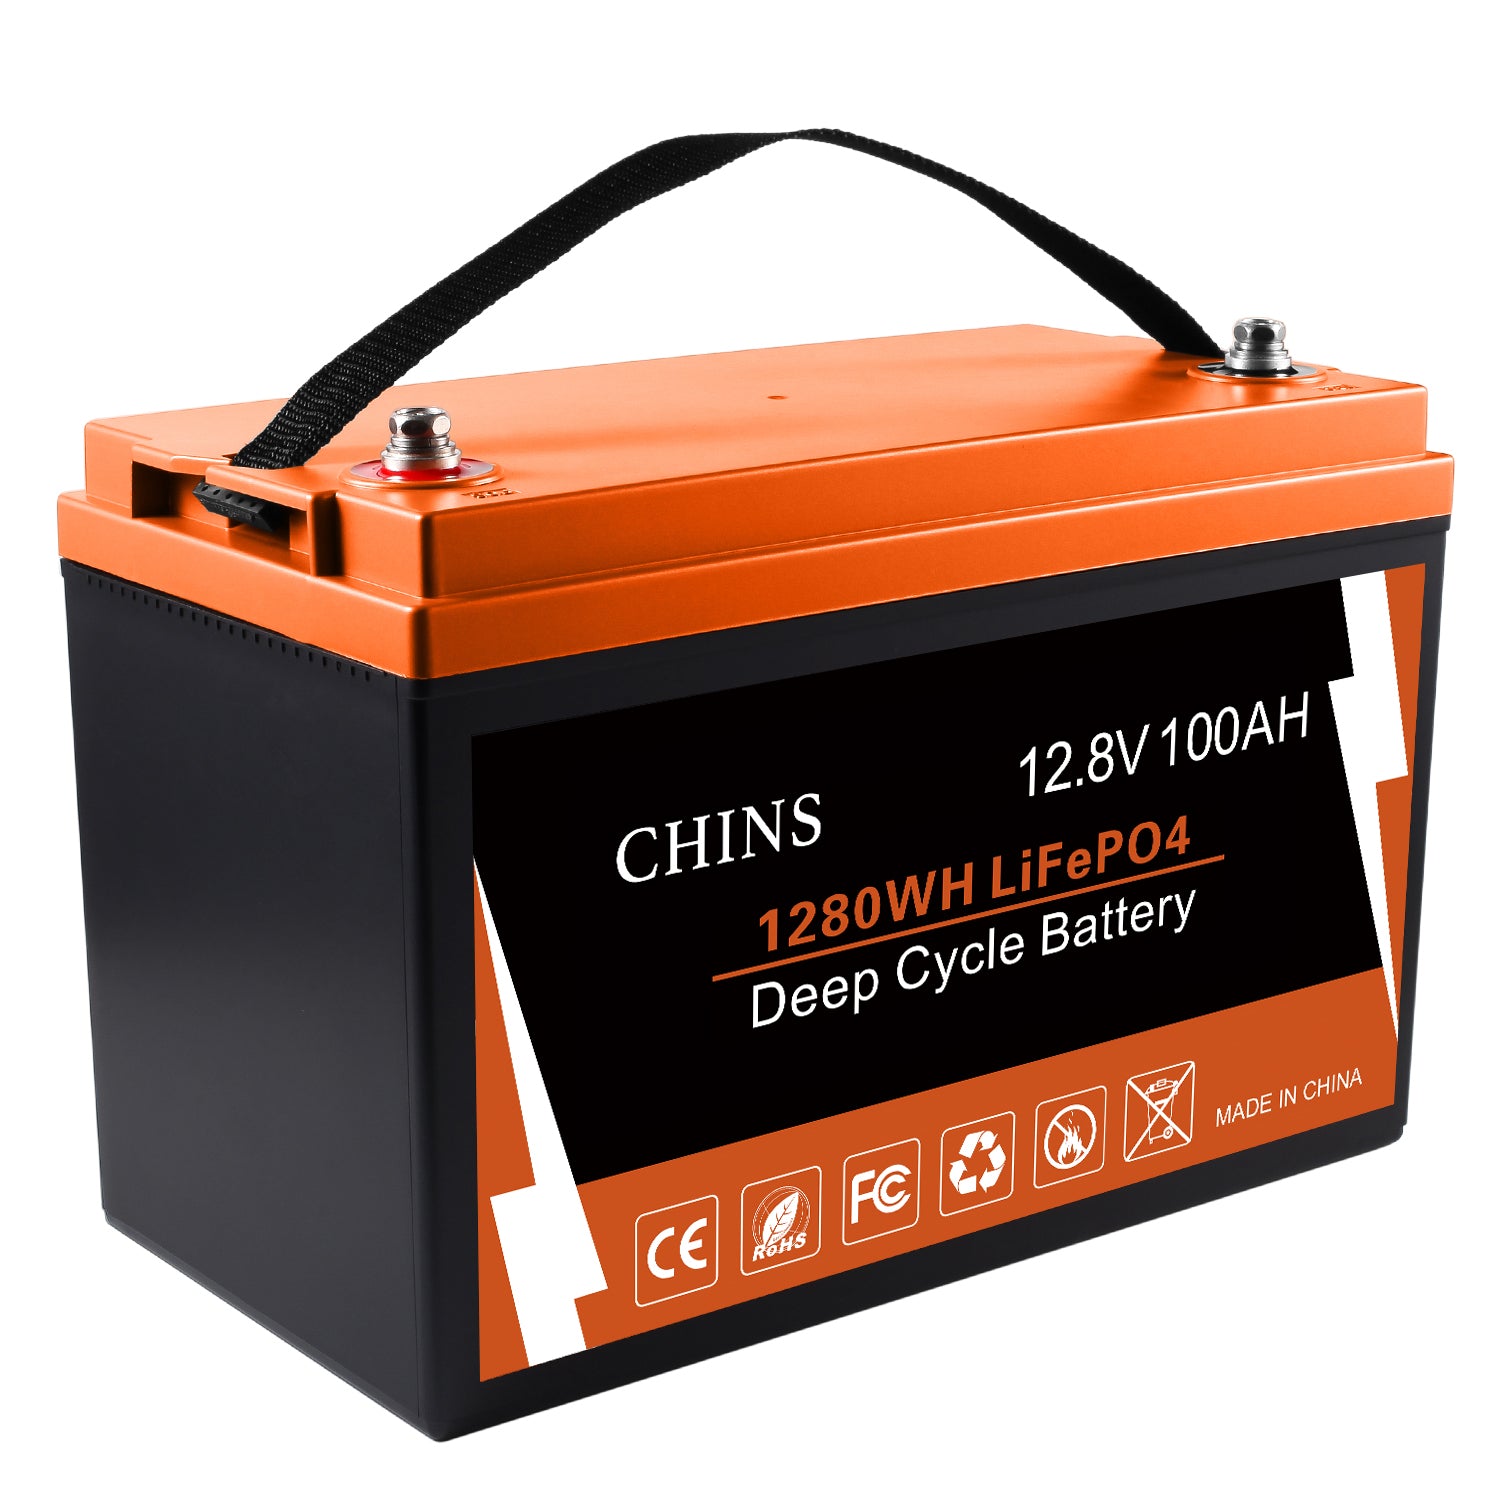 12V 100Ah Lithium-based batteries